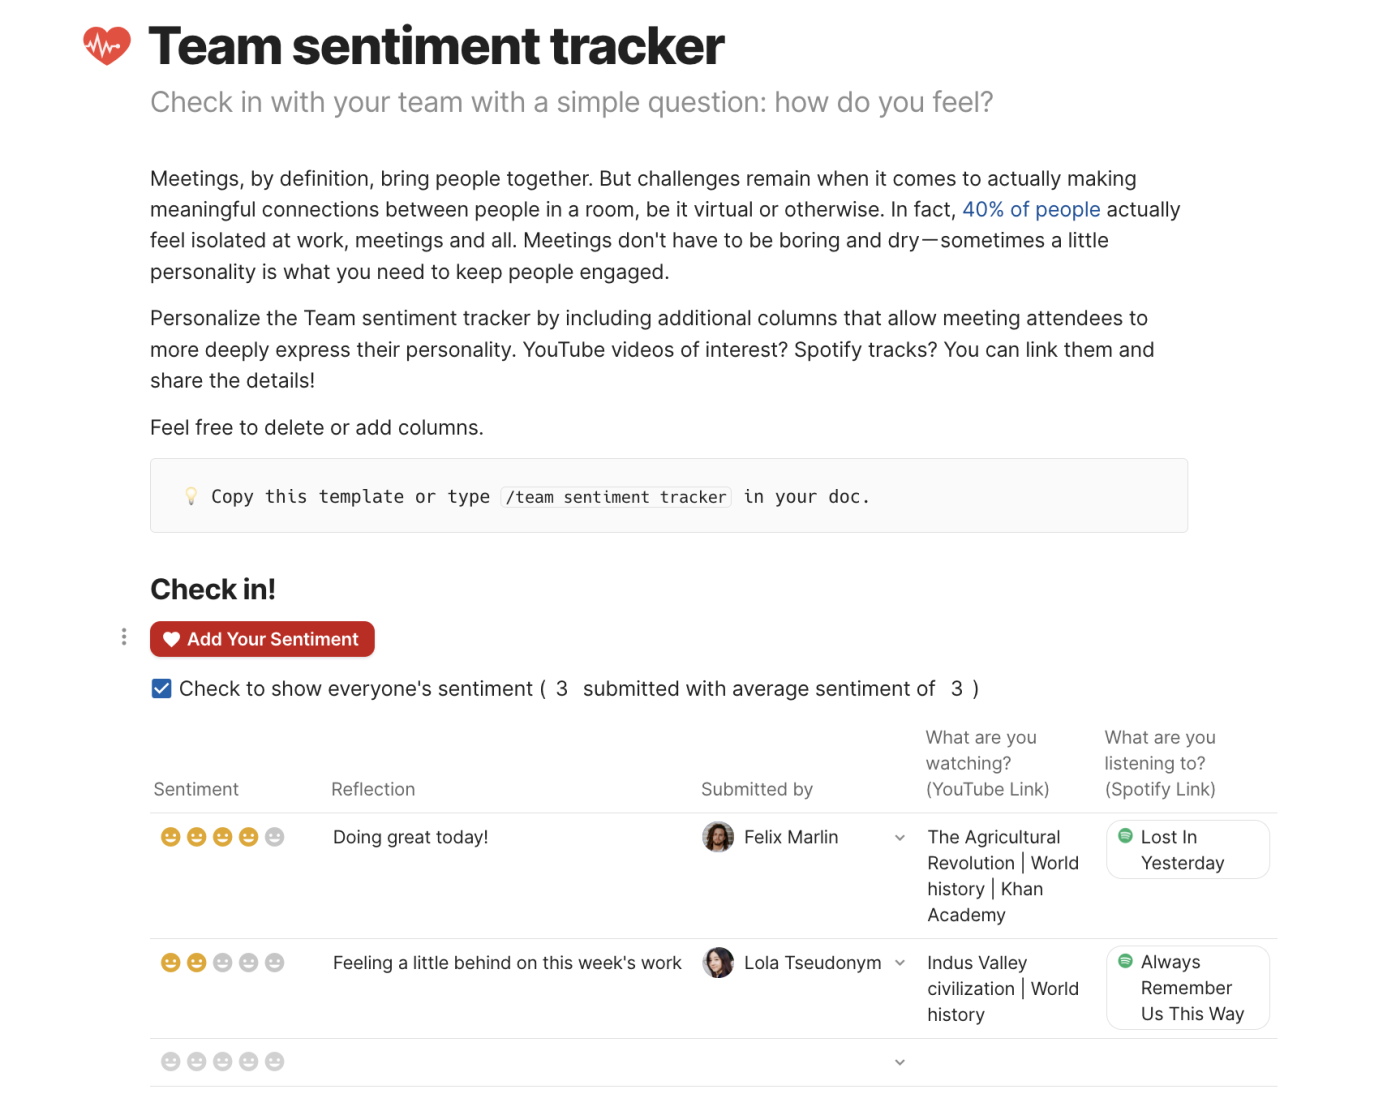 Coda's team sentiment tracker